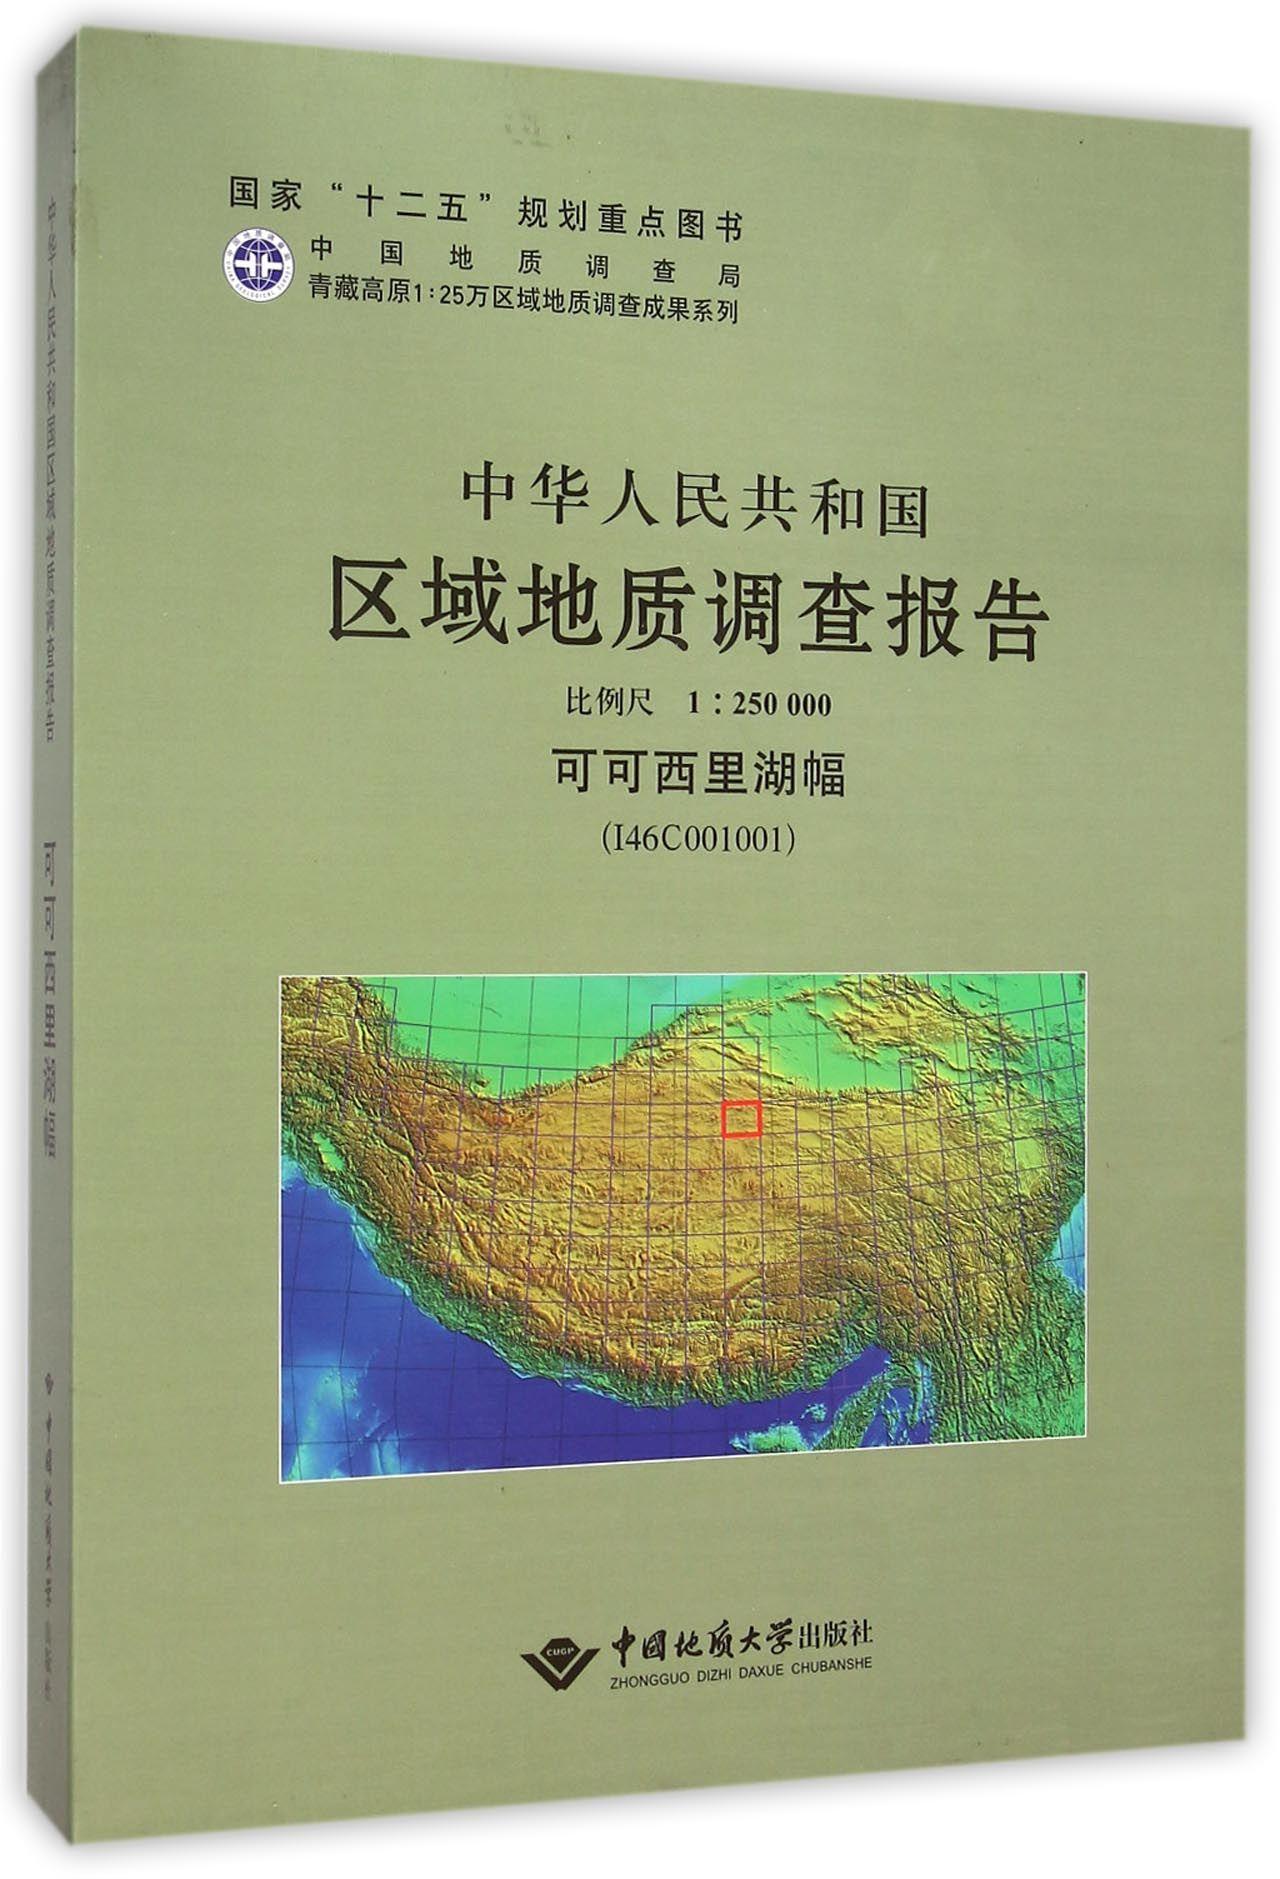 [rt] 中华人民共和国区域地质调查报告:可可西里湖幅(I46C001001) 比例尺1︰250000  朱迎堂写  中国地质大学出版社  自然科学